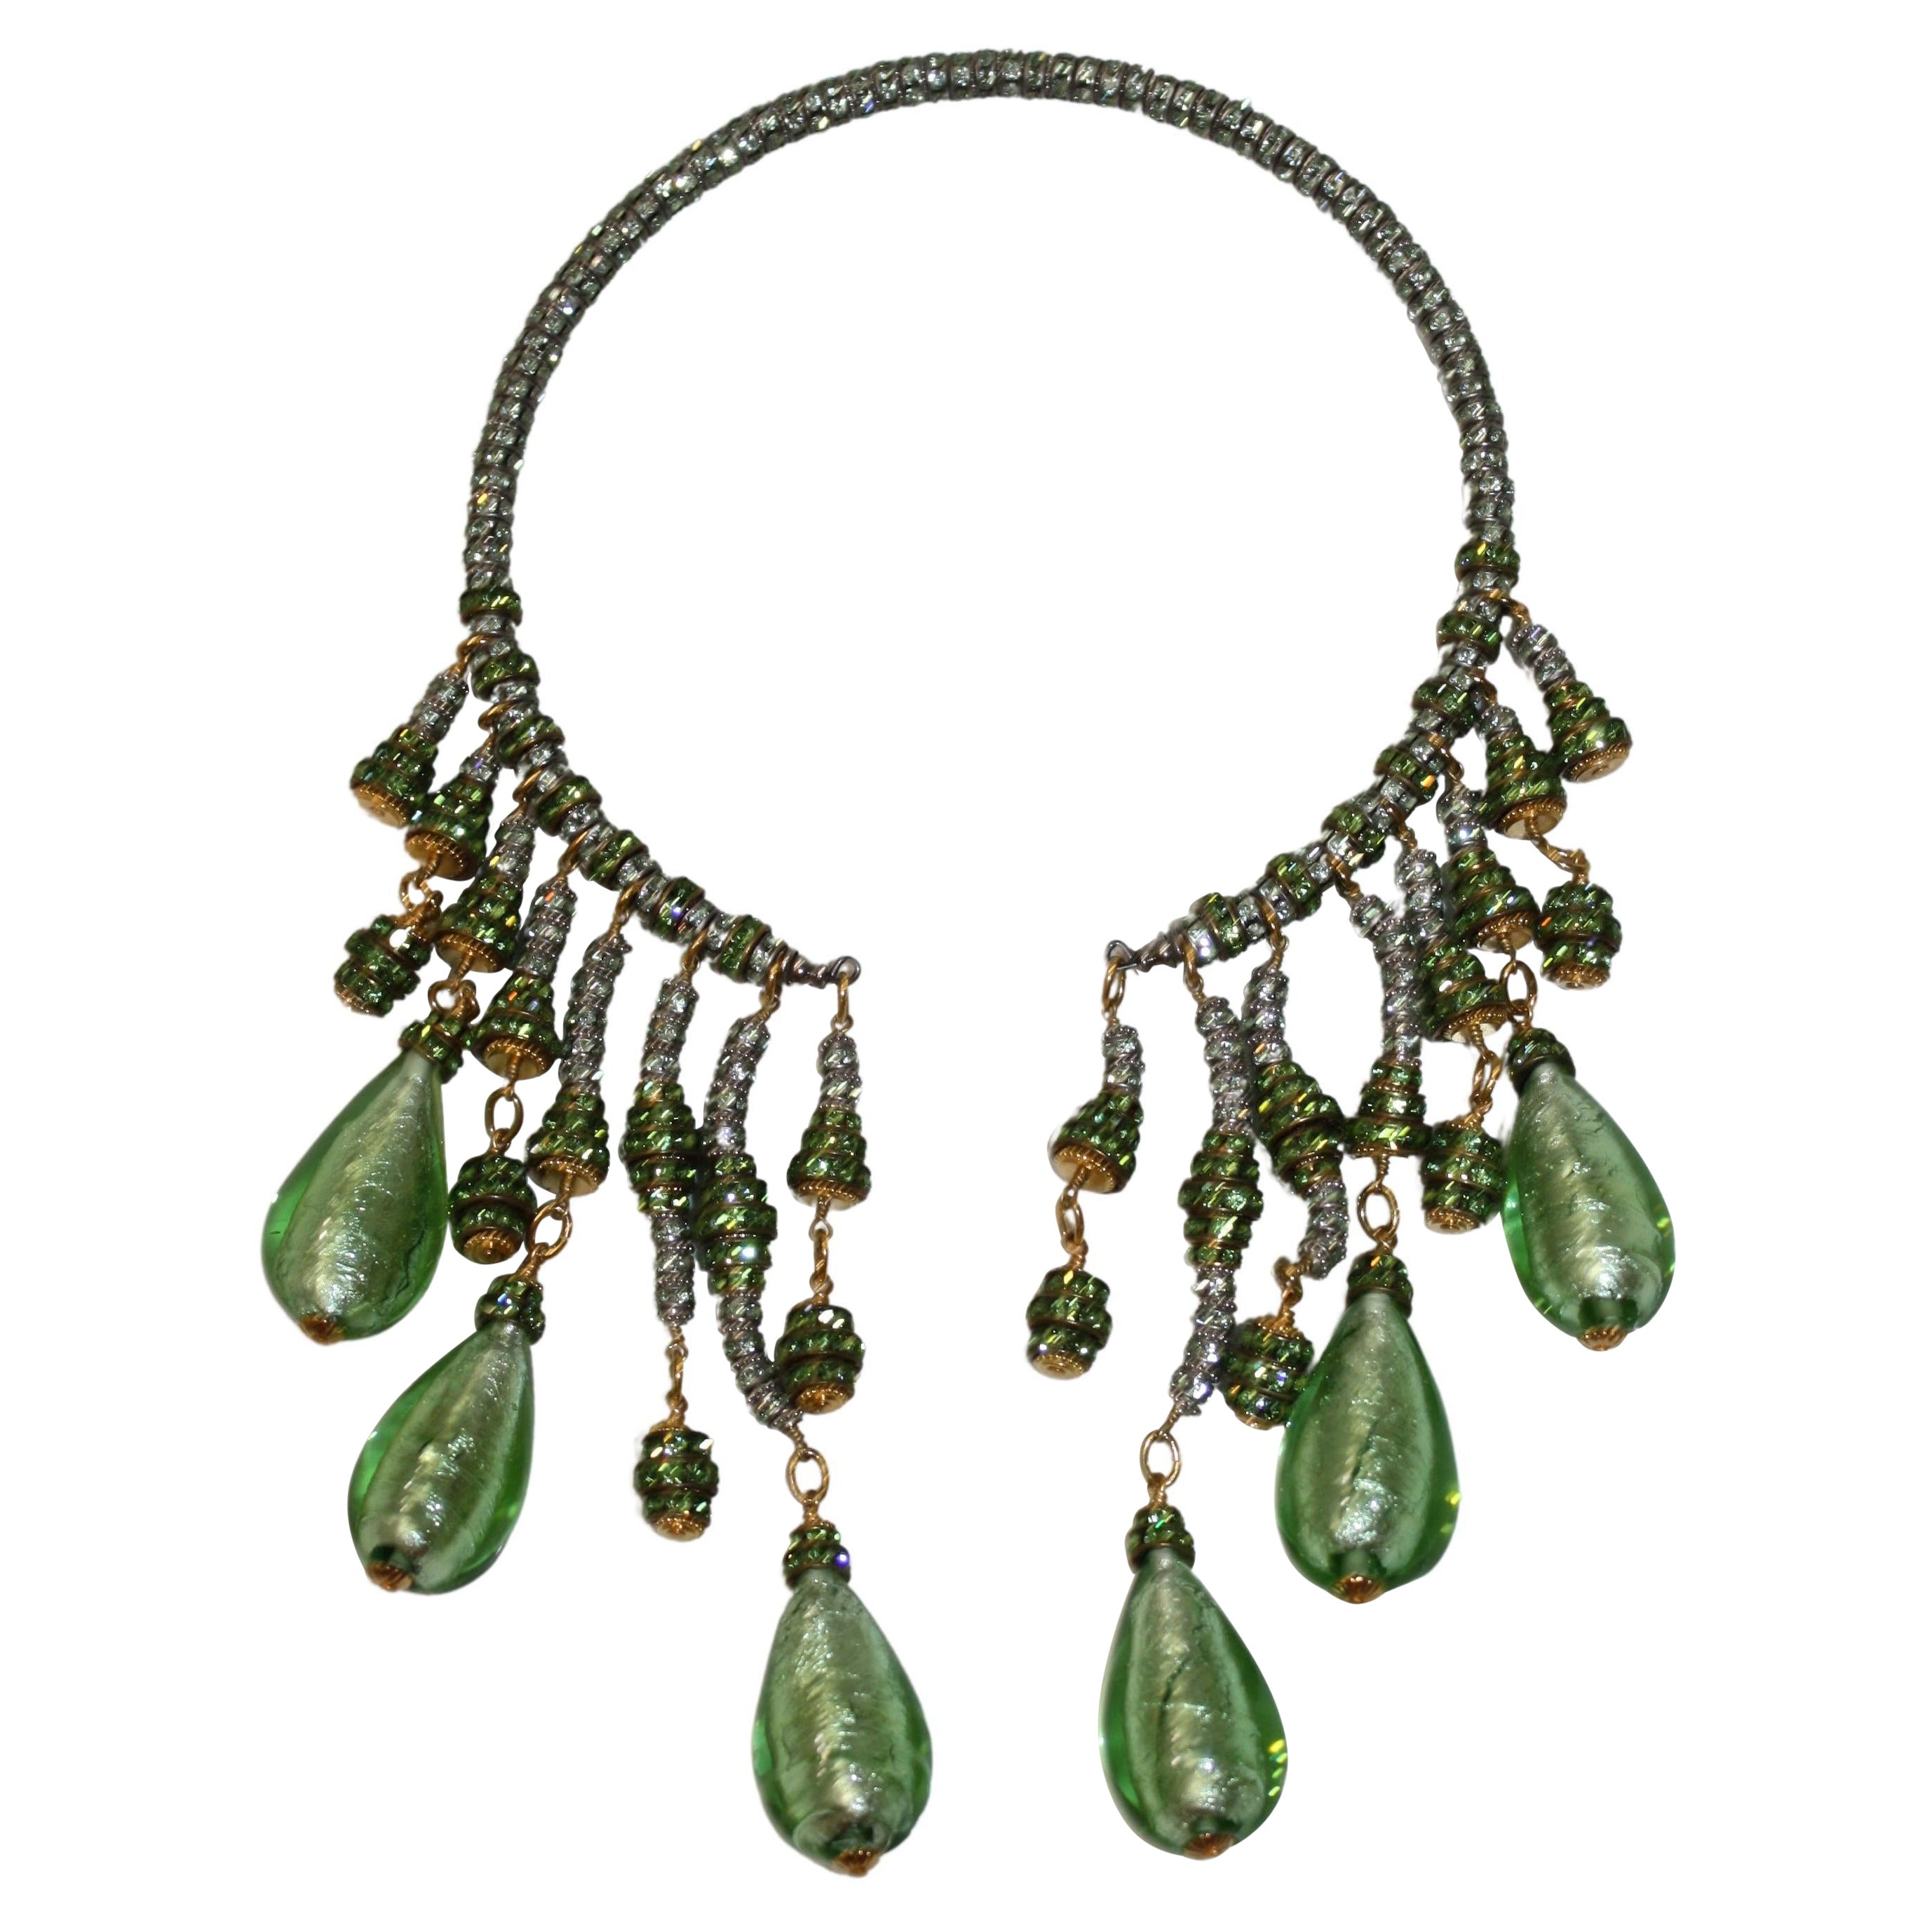 44cm L/ 7cm E Vintage Inspired Green Glass Bead Tassel Necklace In Bronze Tone 